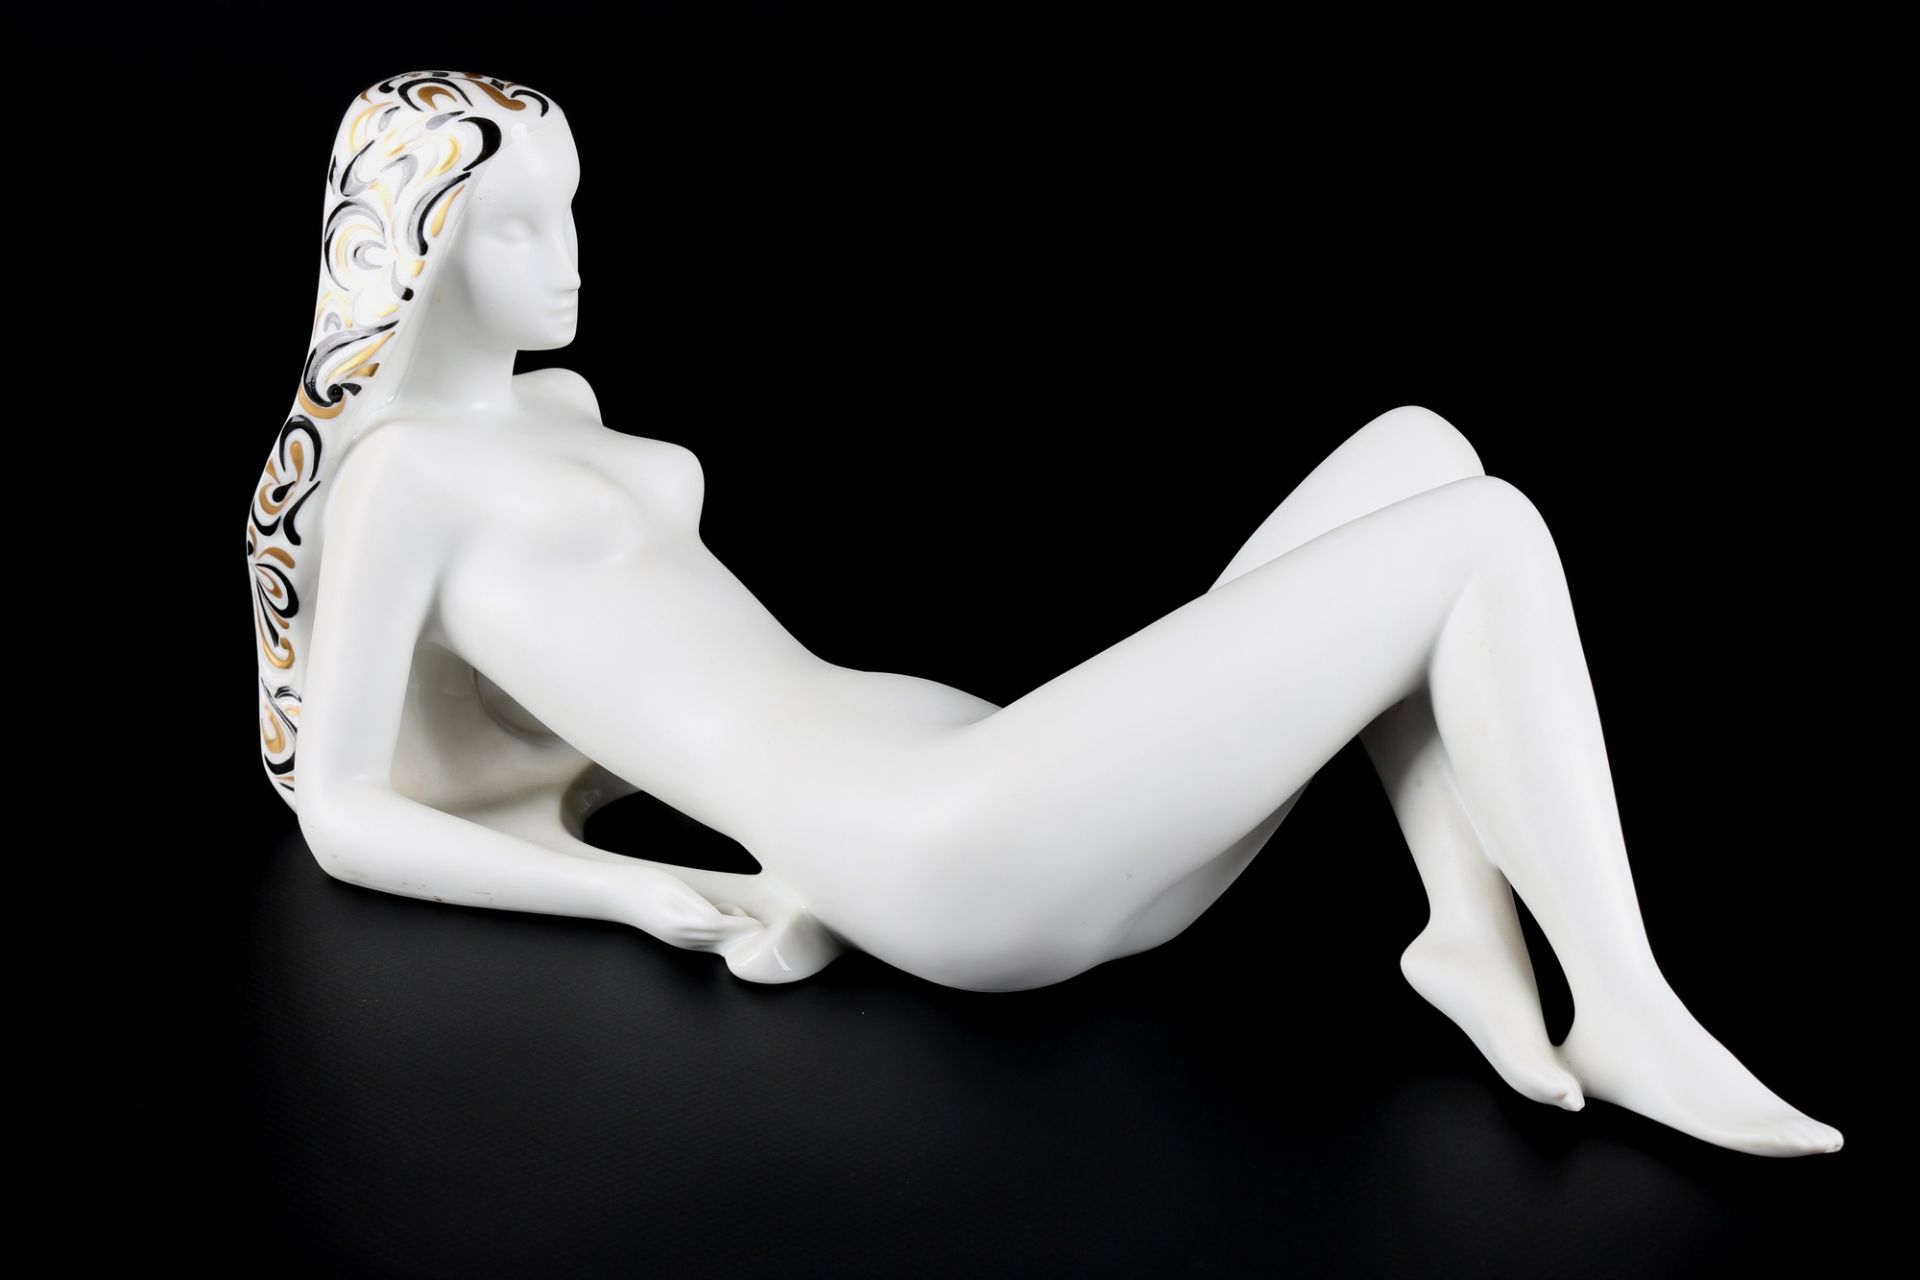 Royal Dux Bohemia 2 Frauenakte Anita und Babeta, nude figurines - Bild 5 aus 6